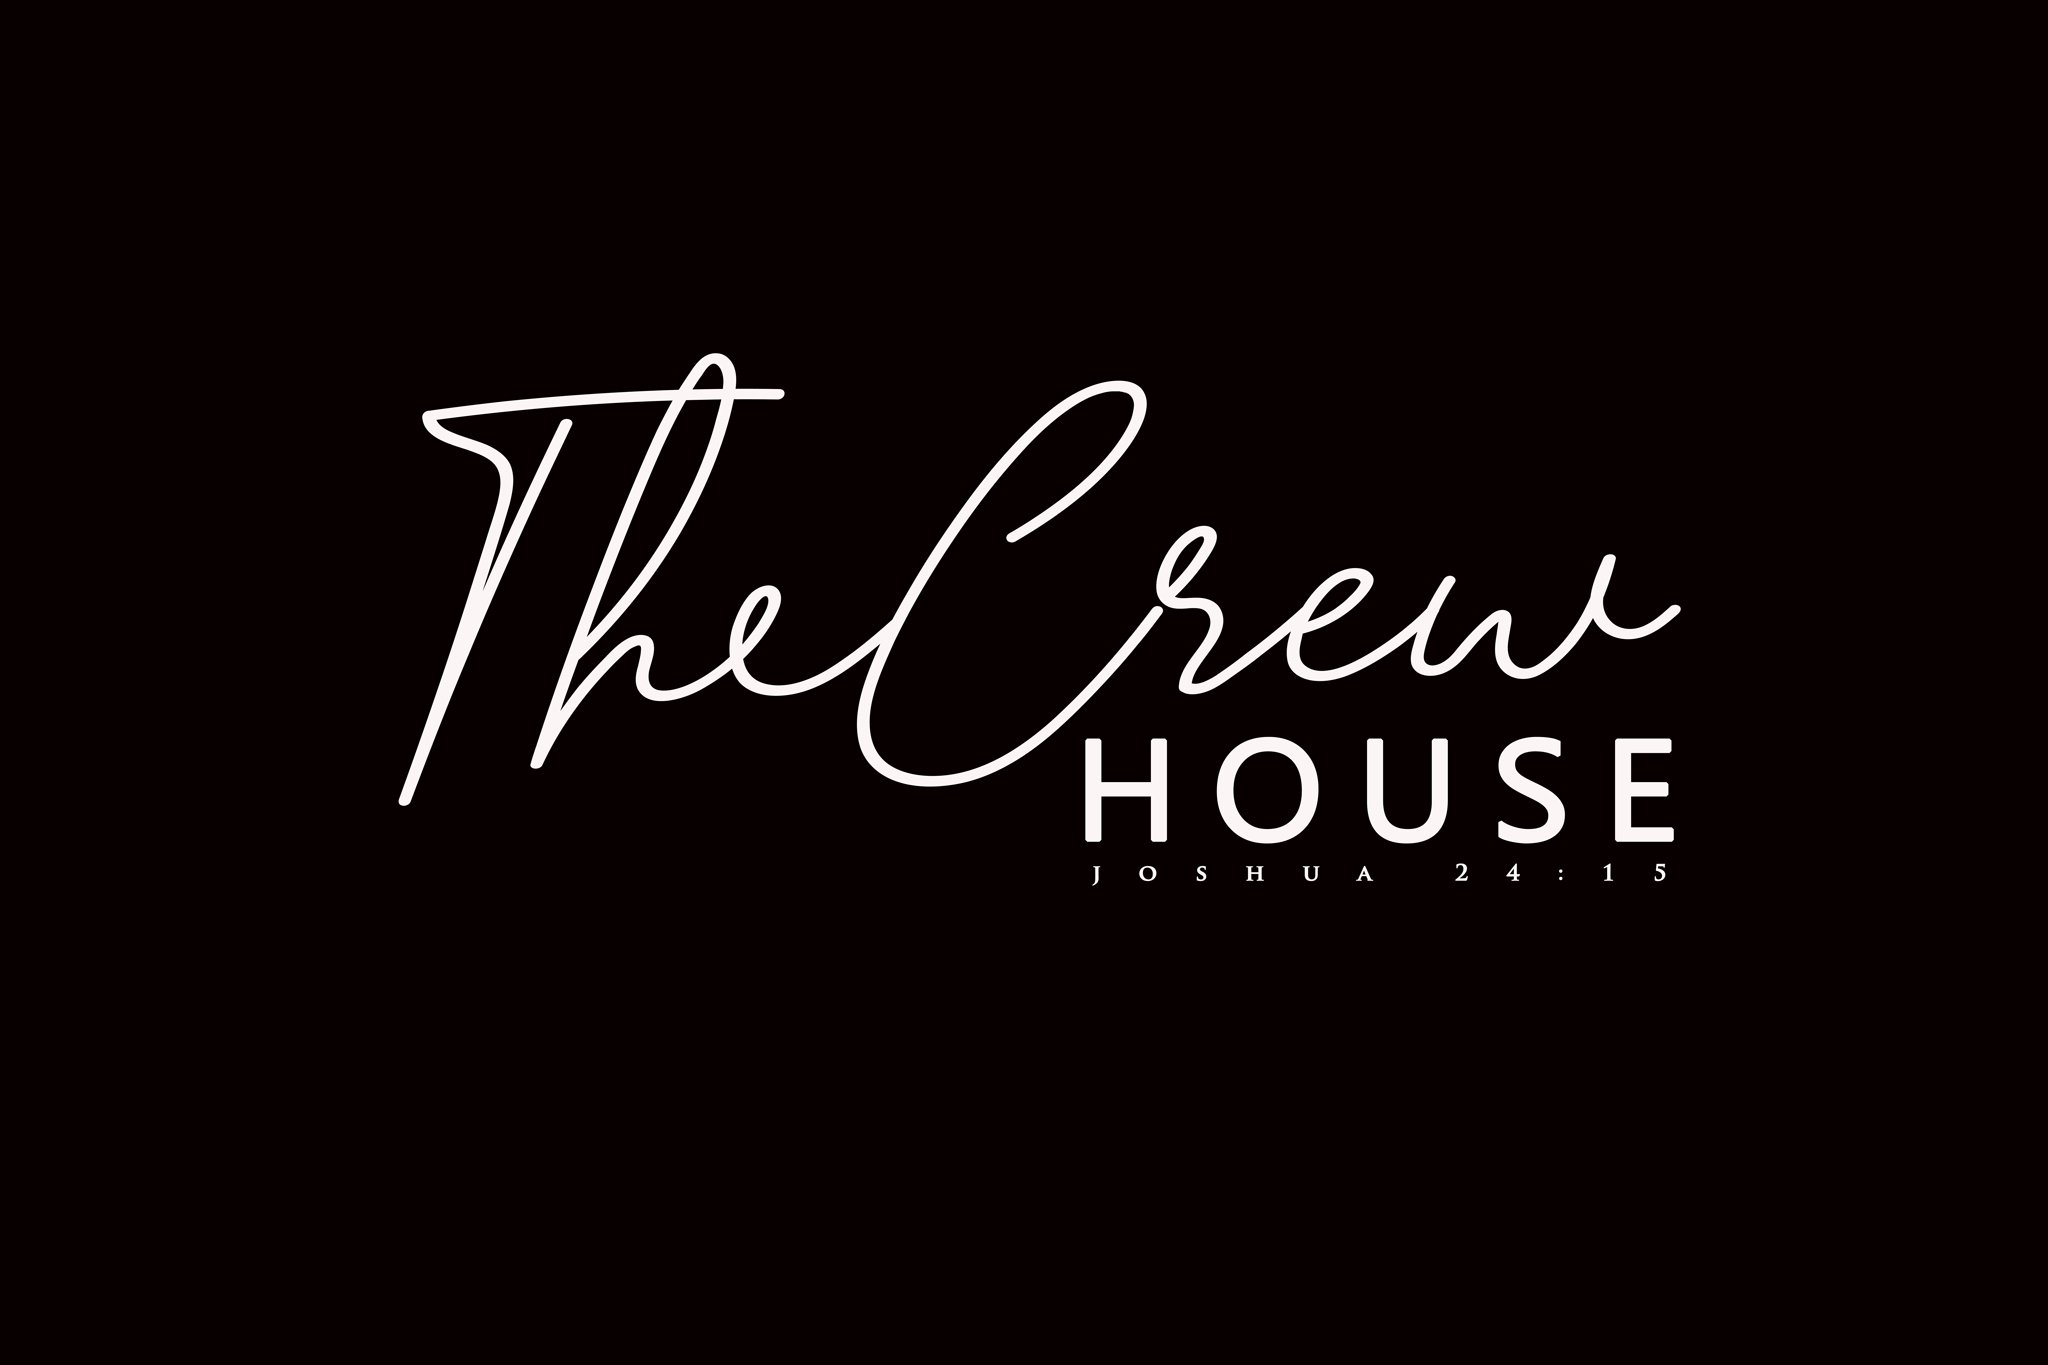 WebThe-Crew-House-Logo-Black-Background-.jpg